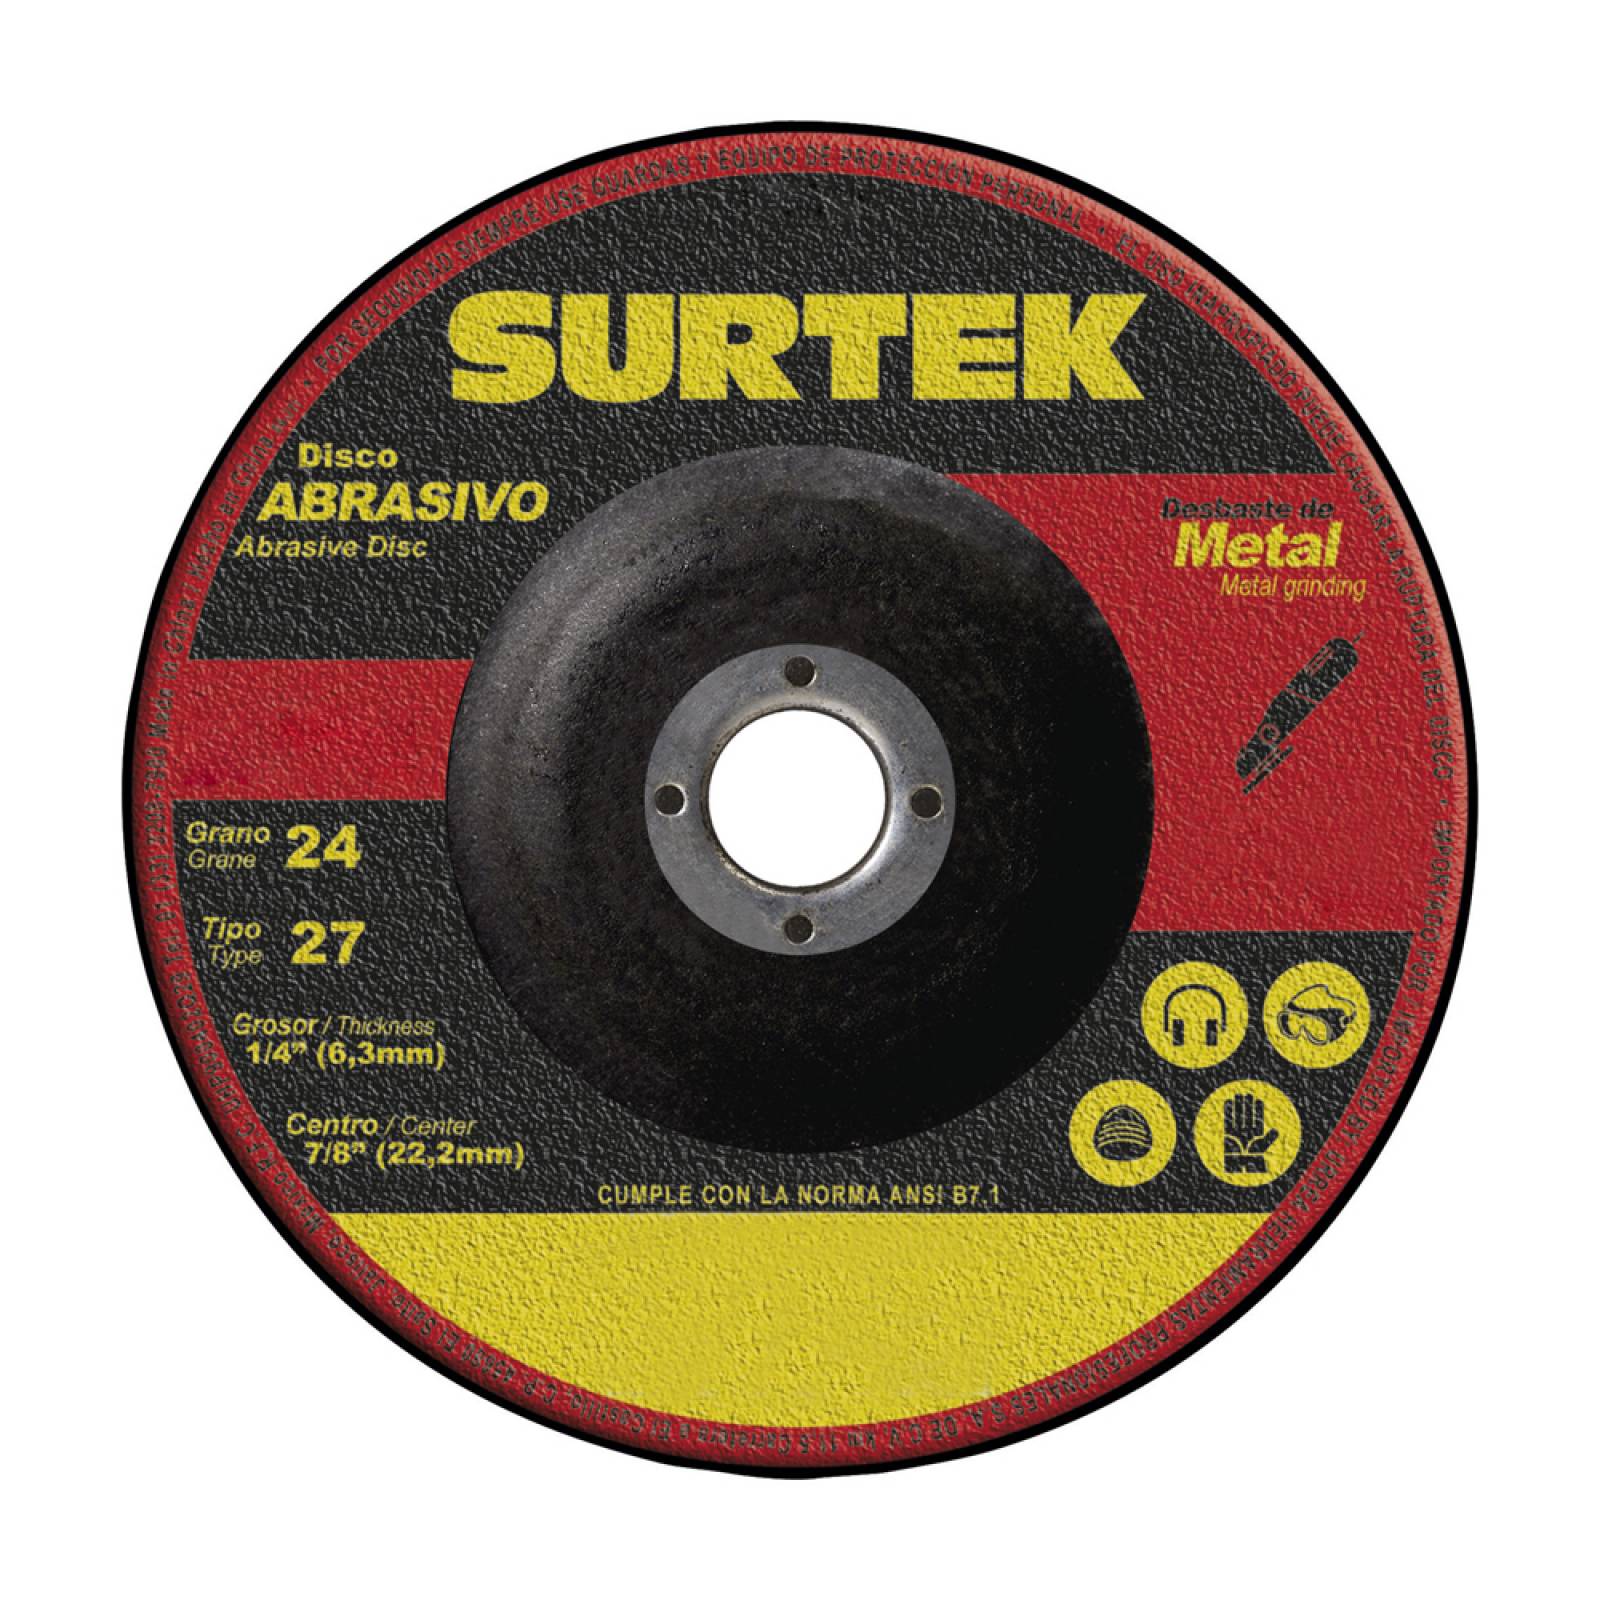 Disco T/27 Metal 9x1/4 Pulgadas 123322 Surtek 